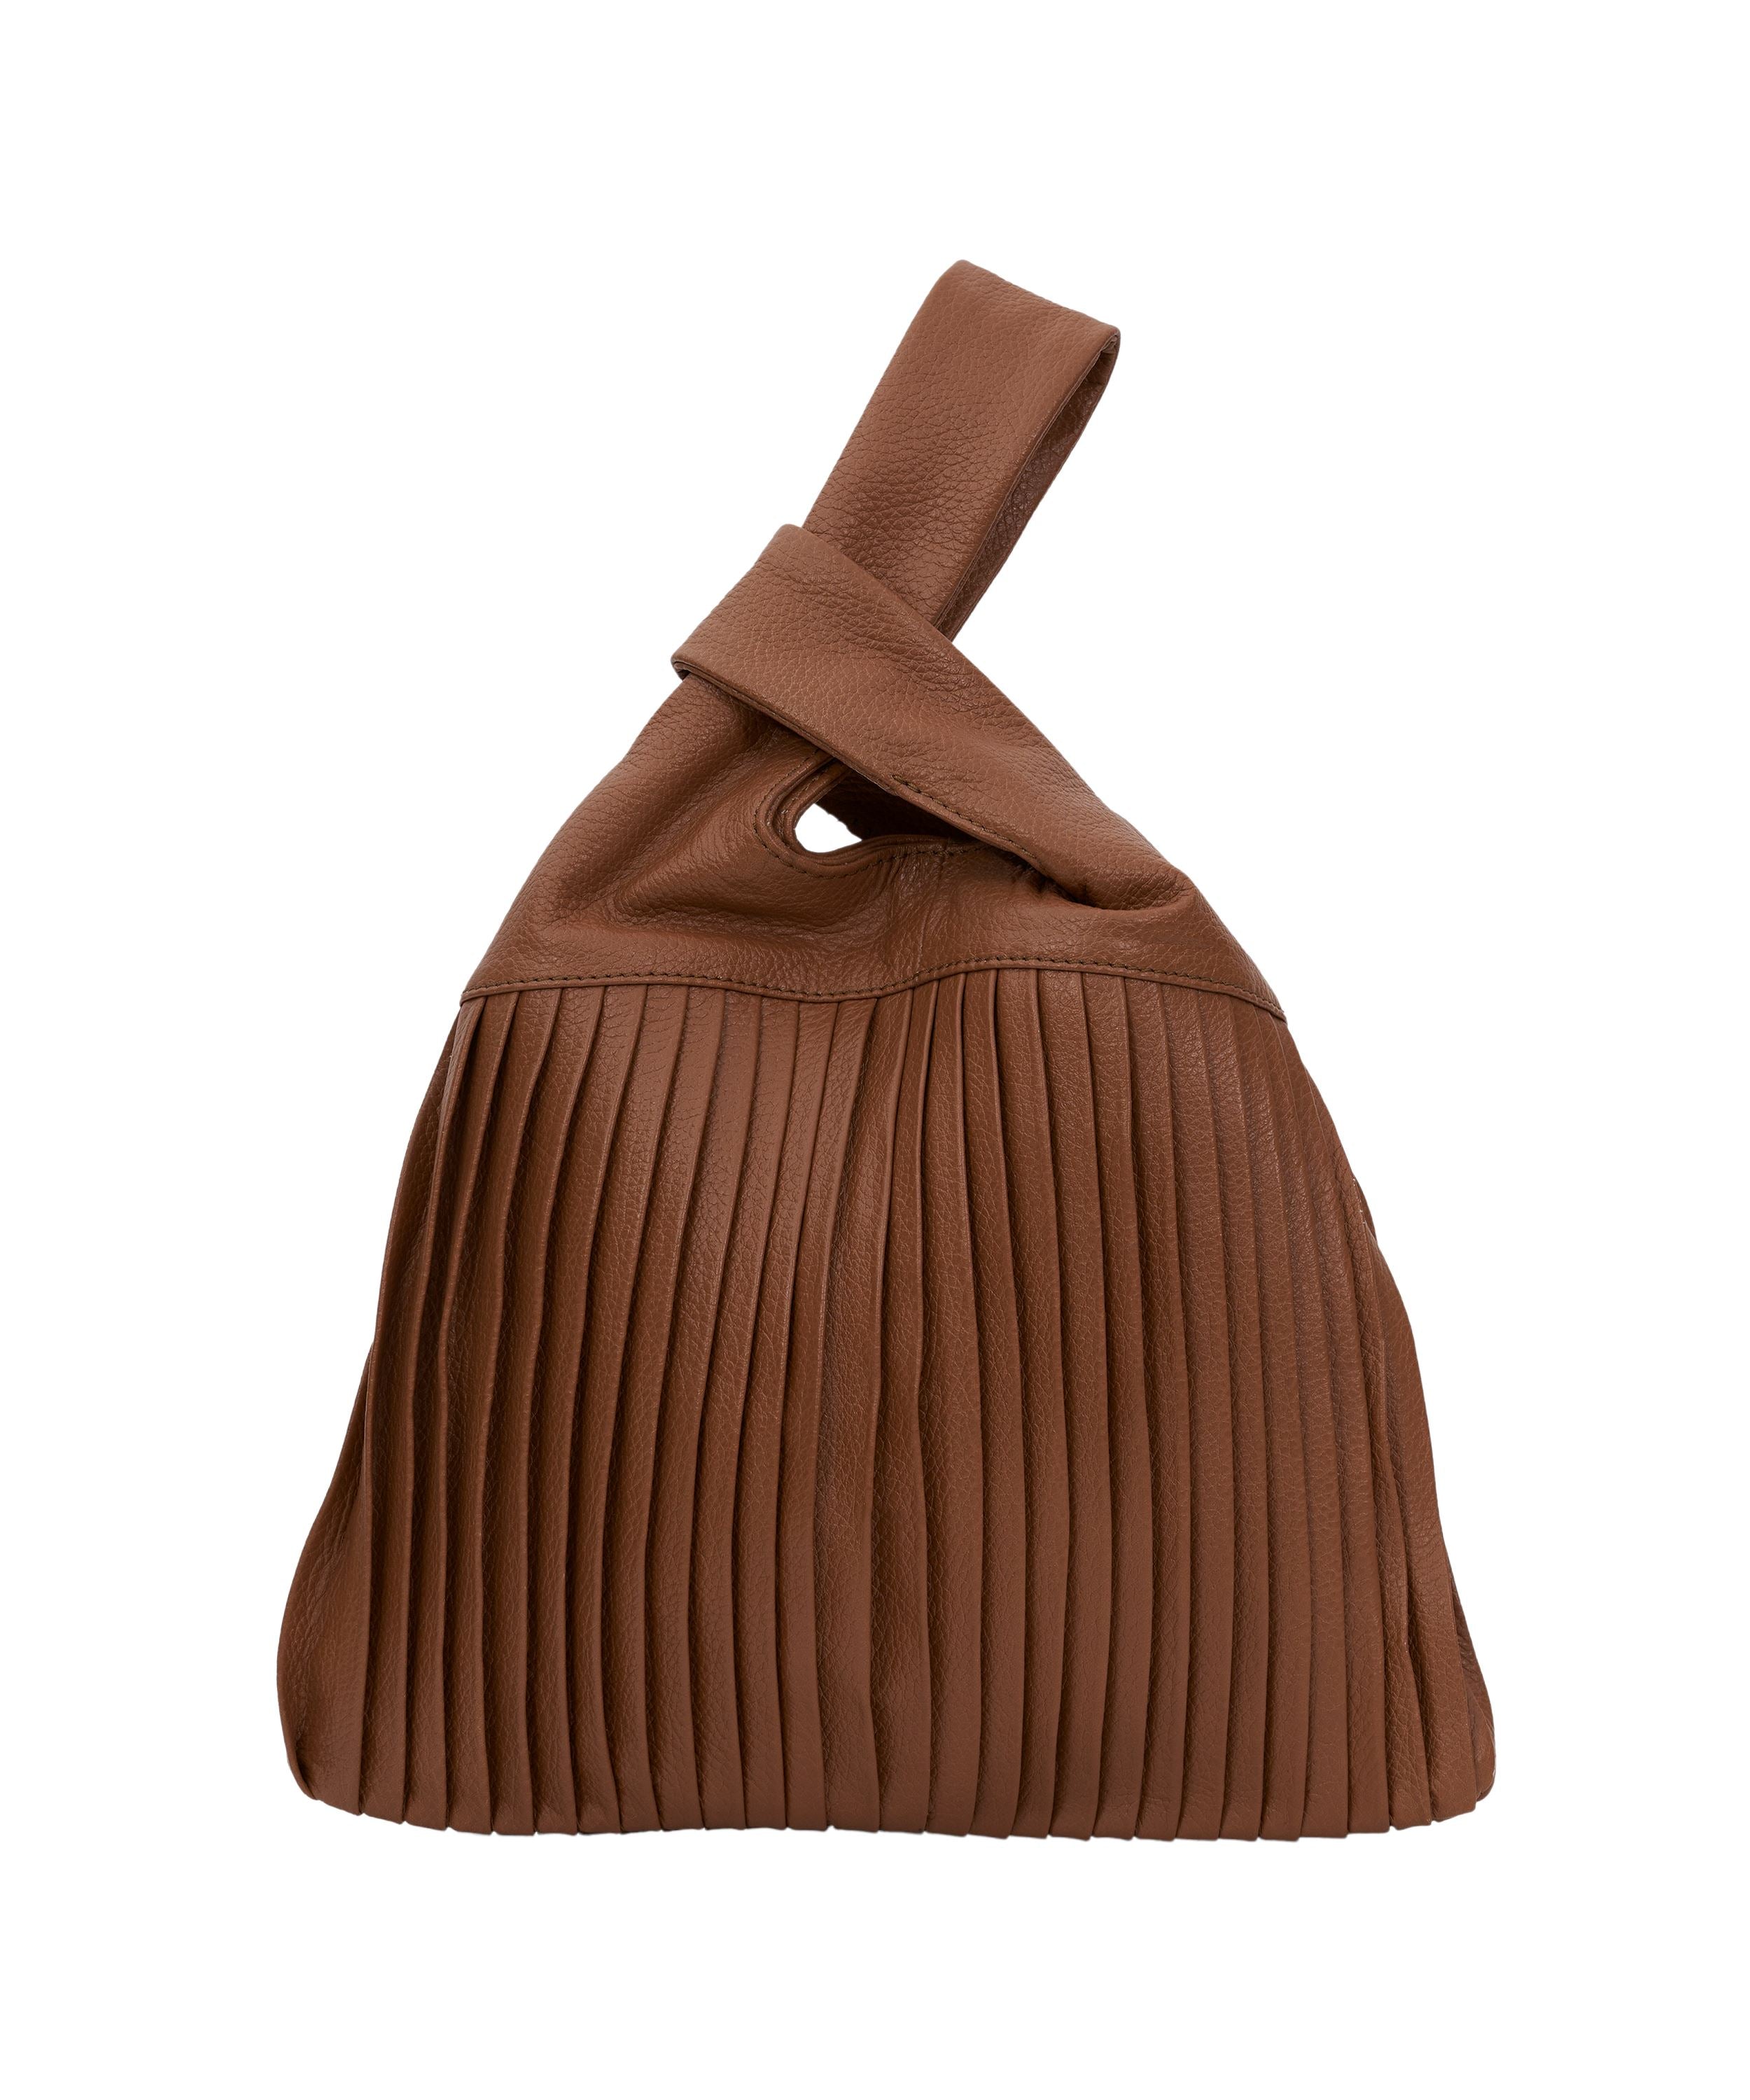 Willow Slouchy Handbag in Tan